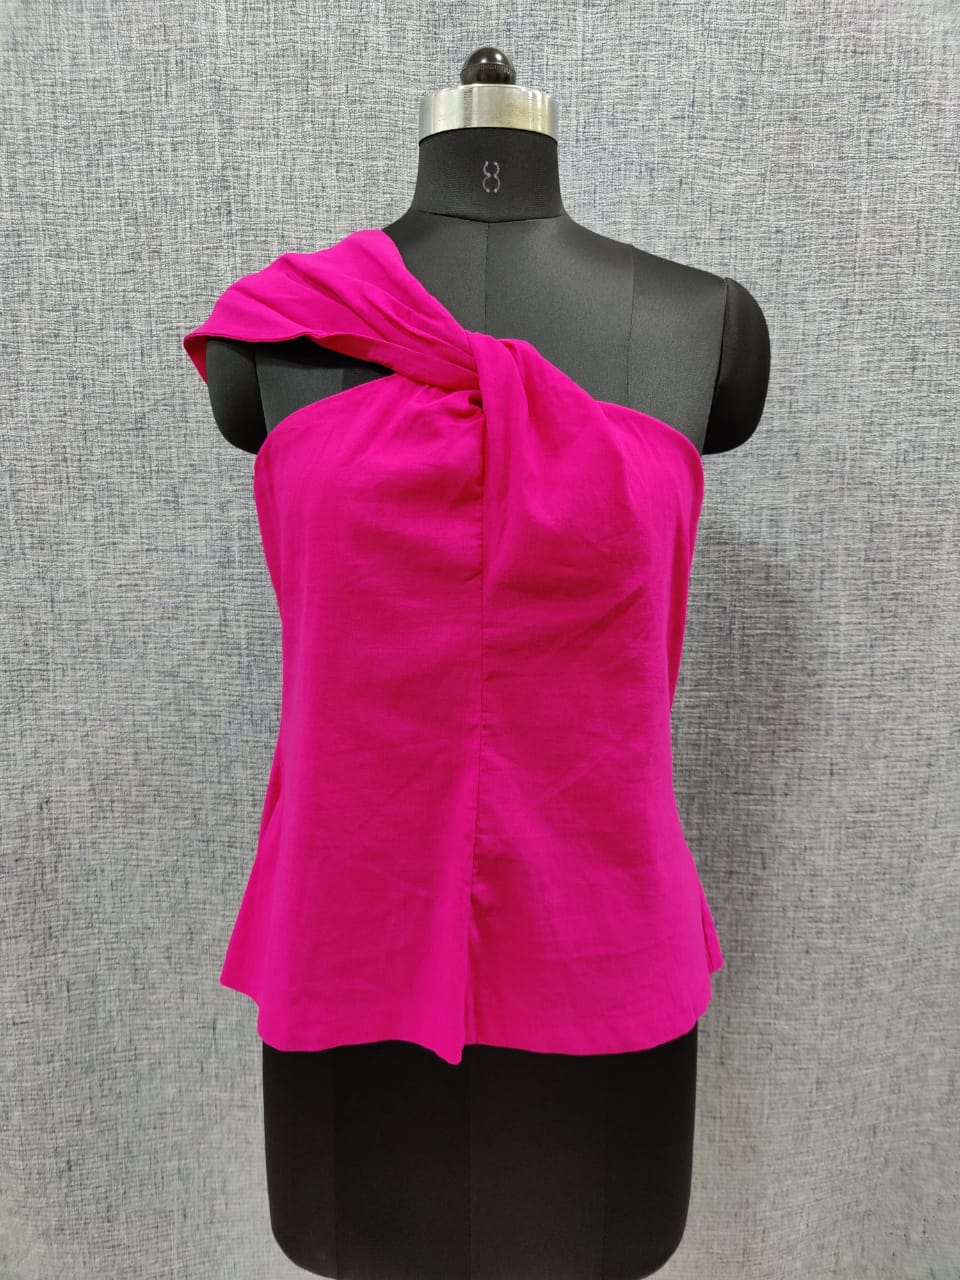 ZARA Pink Twisted One Shoulder Crop Top | Relove